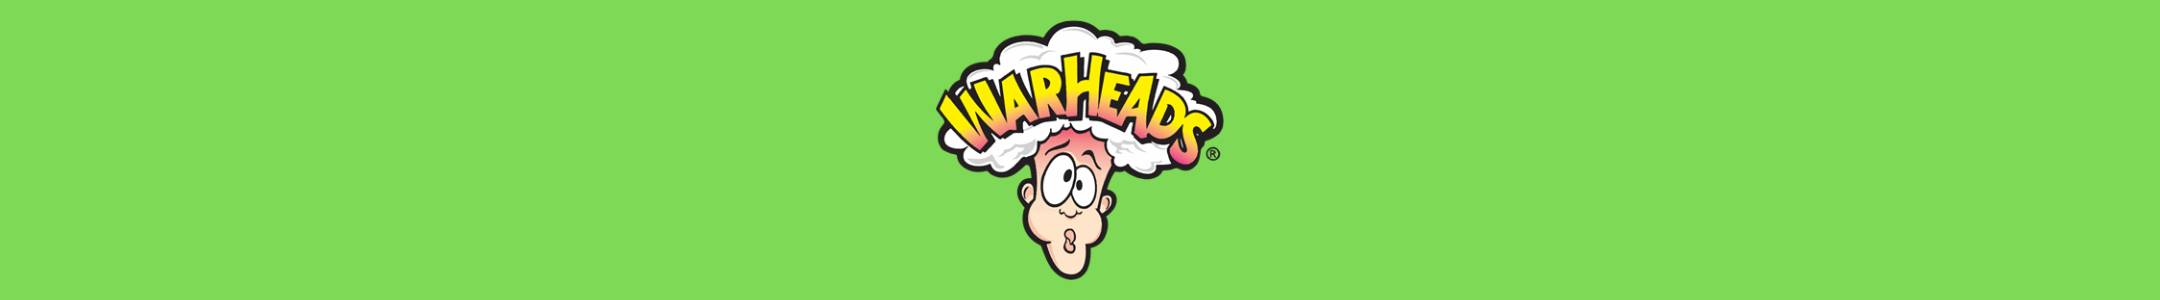 WARHEADS